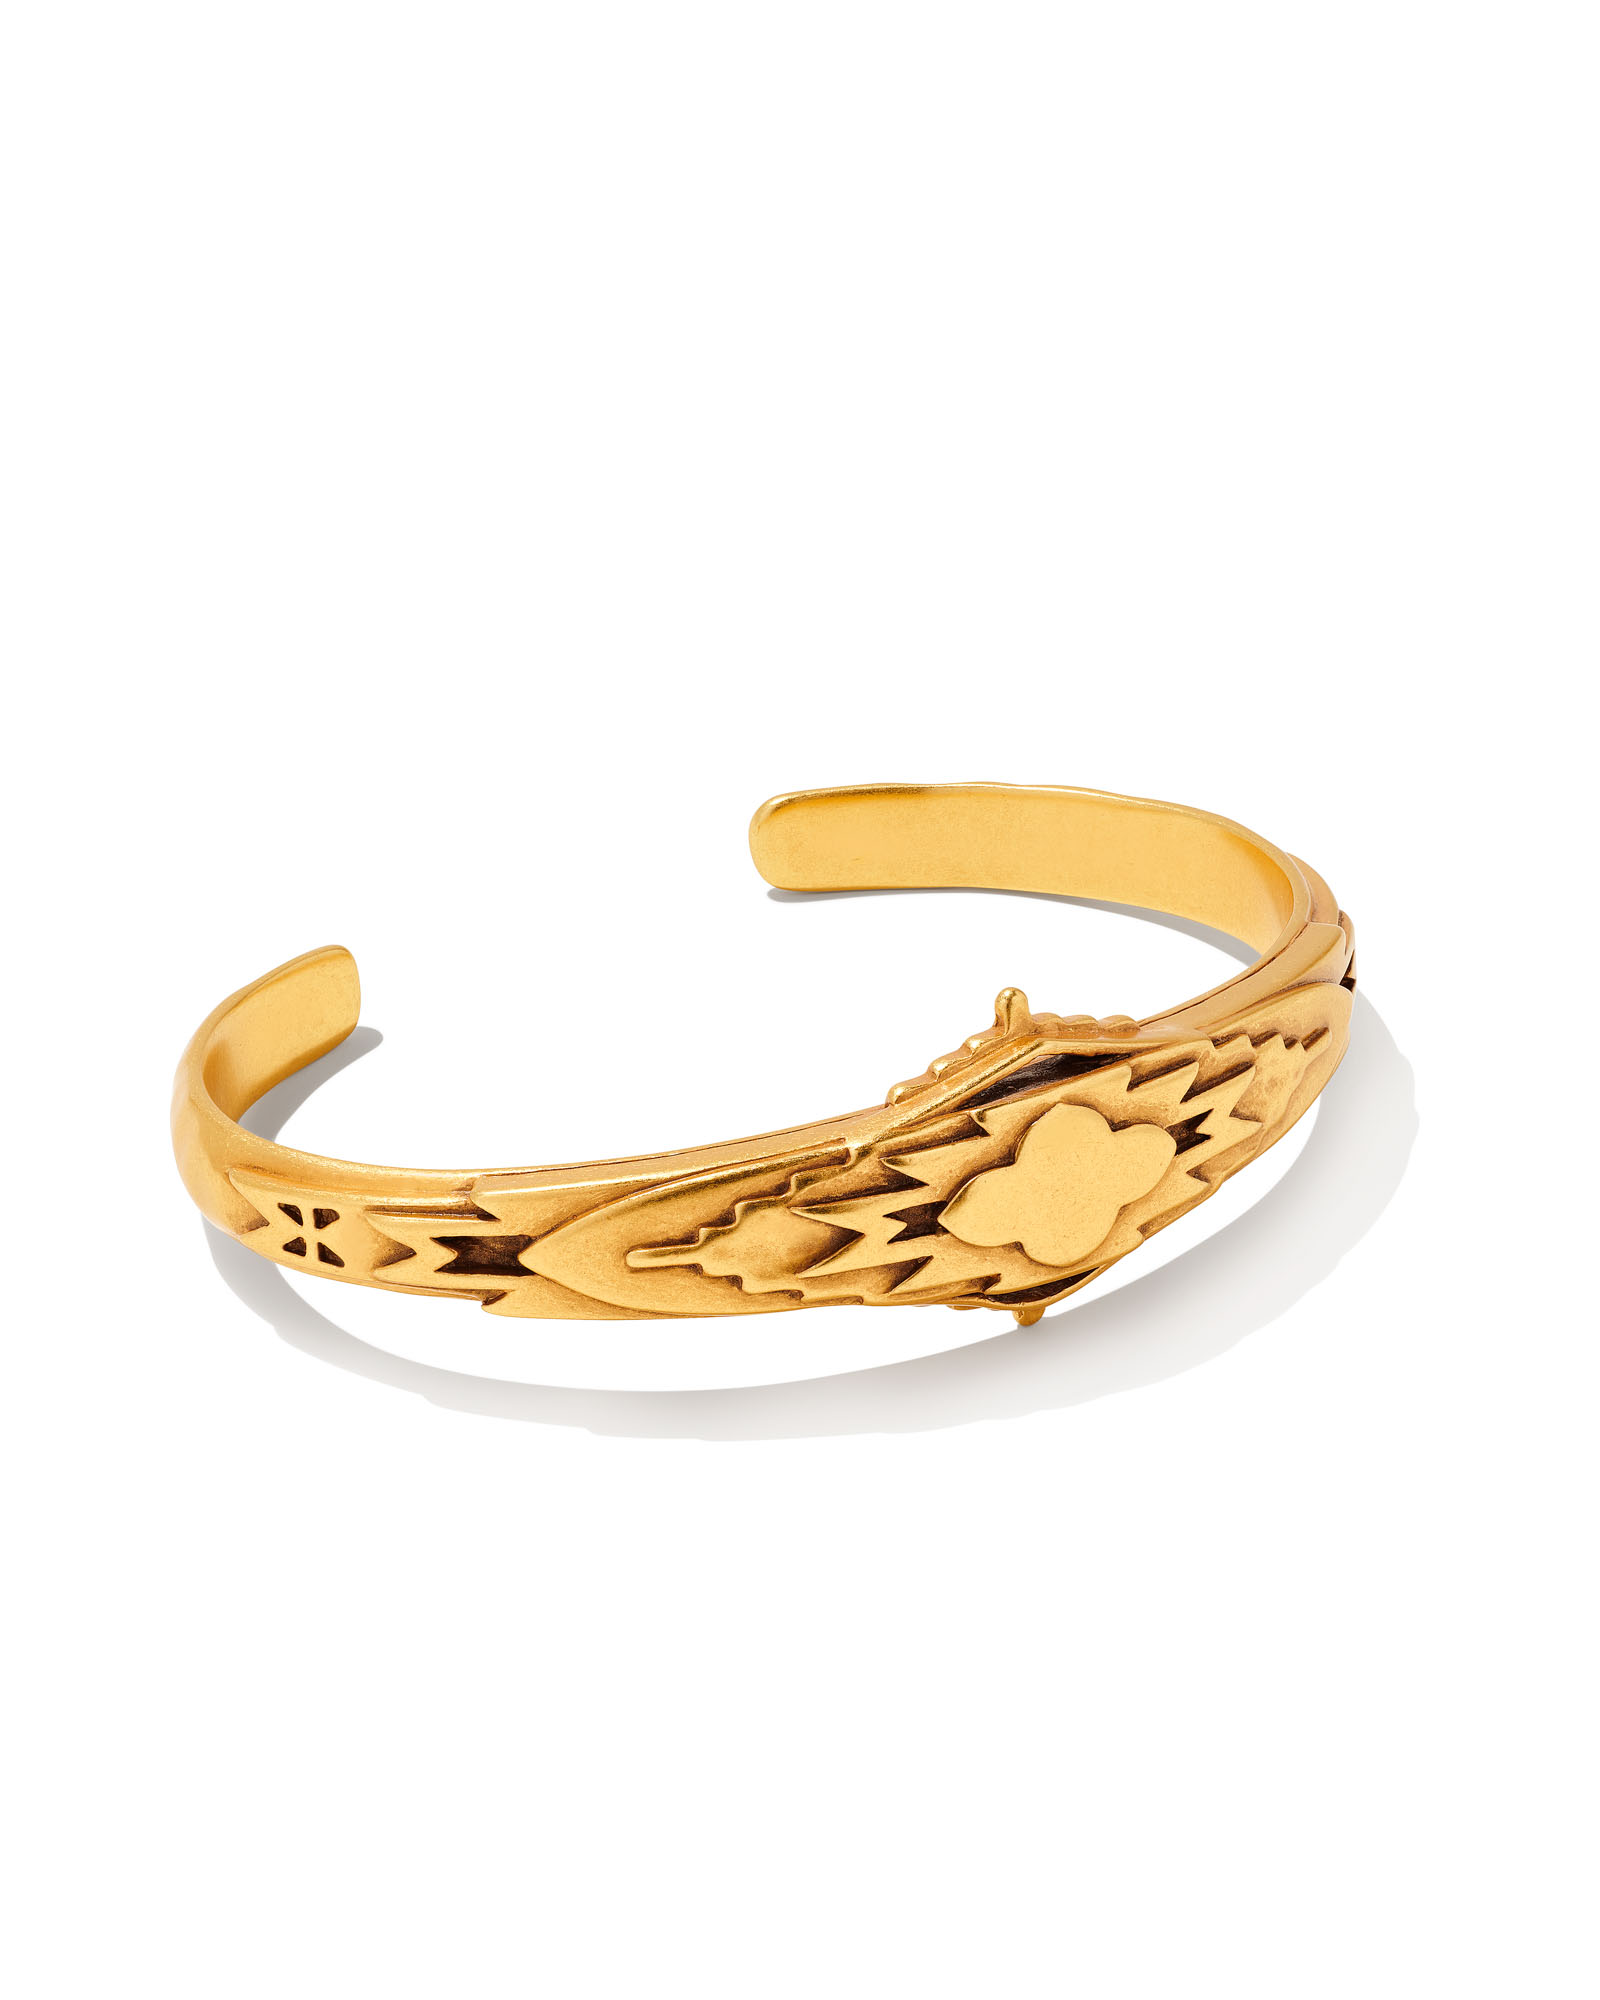 Kendra Scott Iris Rhodium Over Brass Cuff Bracelet - Silver : Target